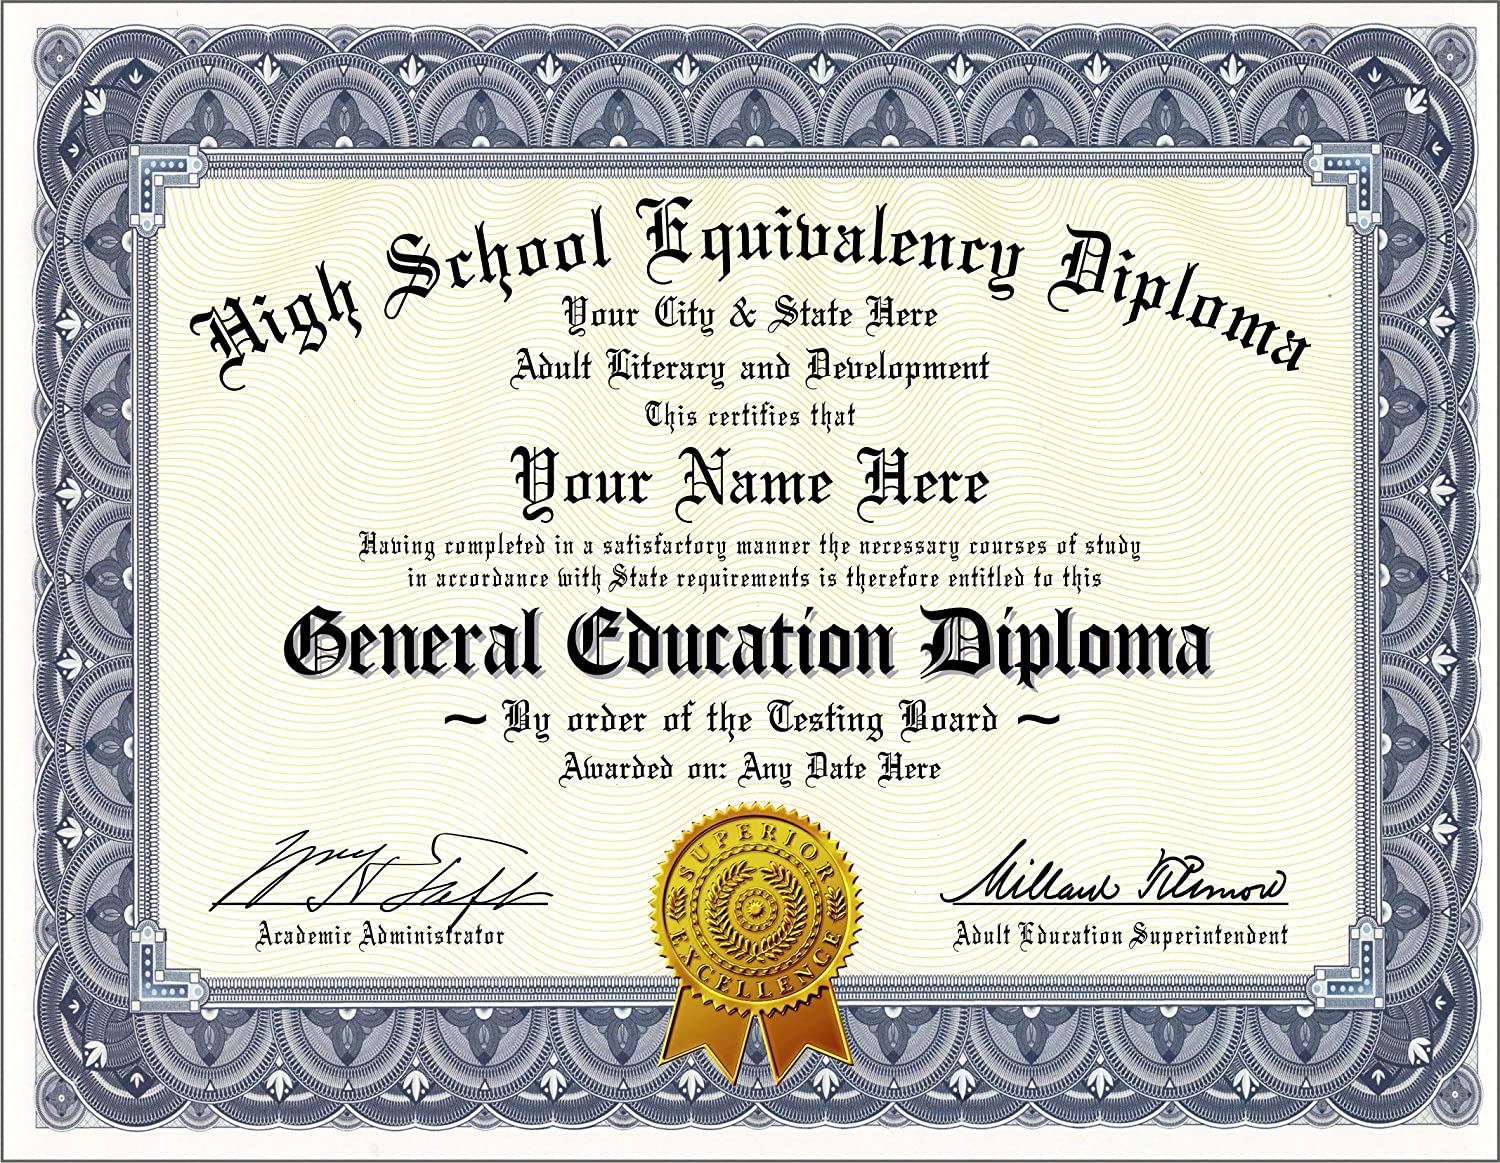 hse certificate image